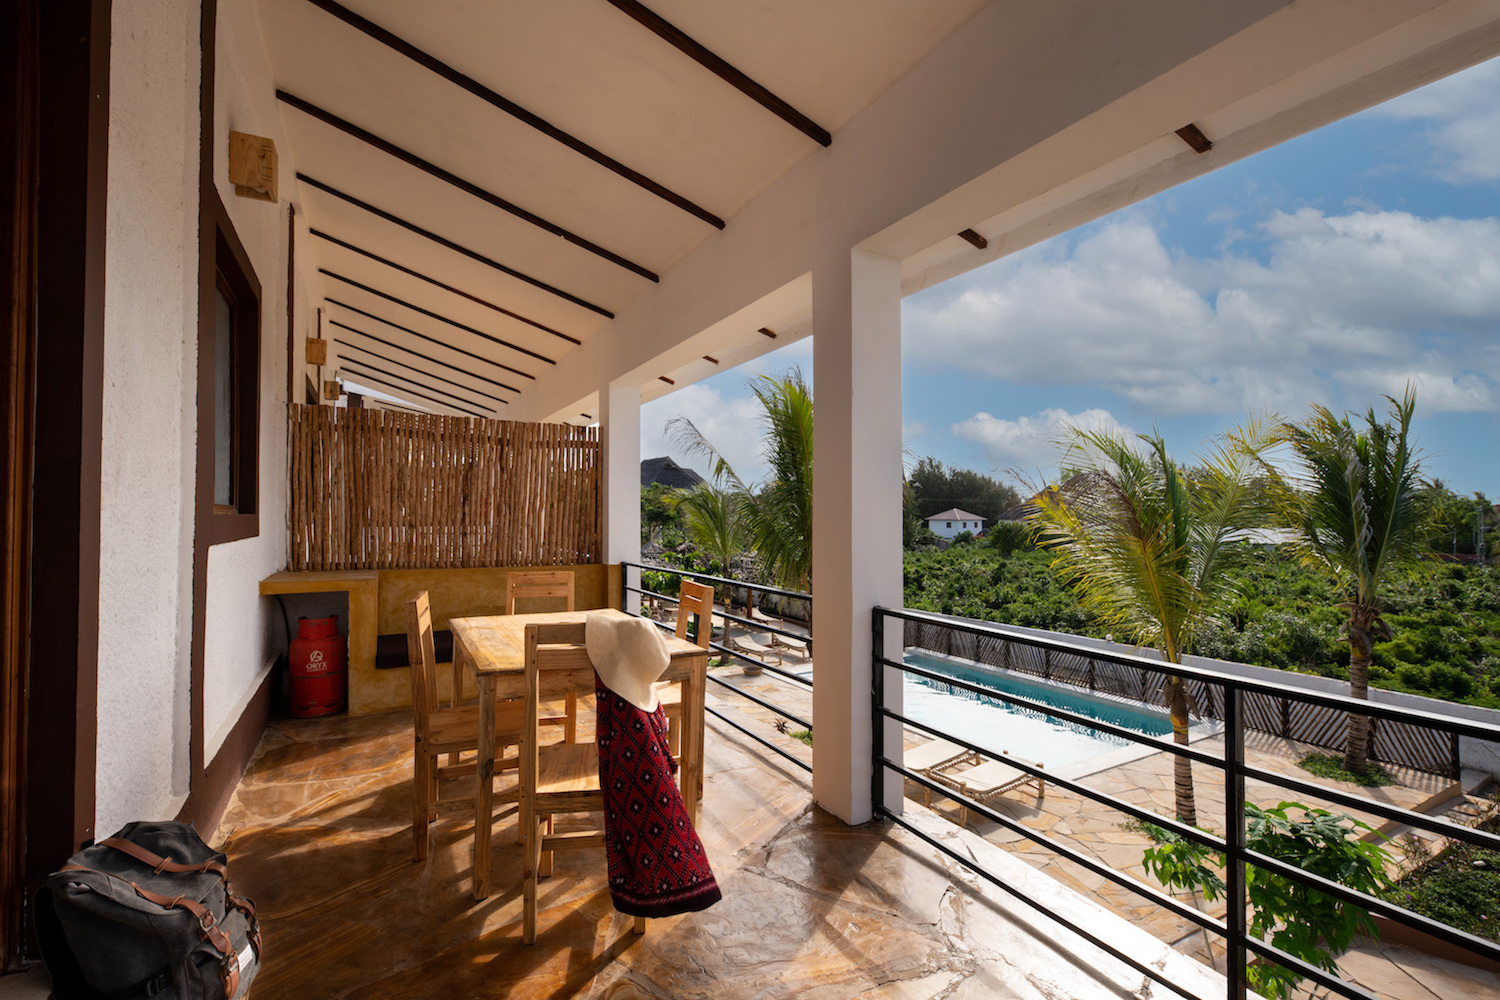 Our Zanzibar Group Nyumbani Residence veranda with chairs and view of pool one bedroom apartment